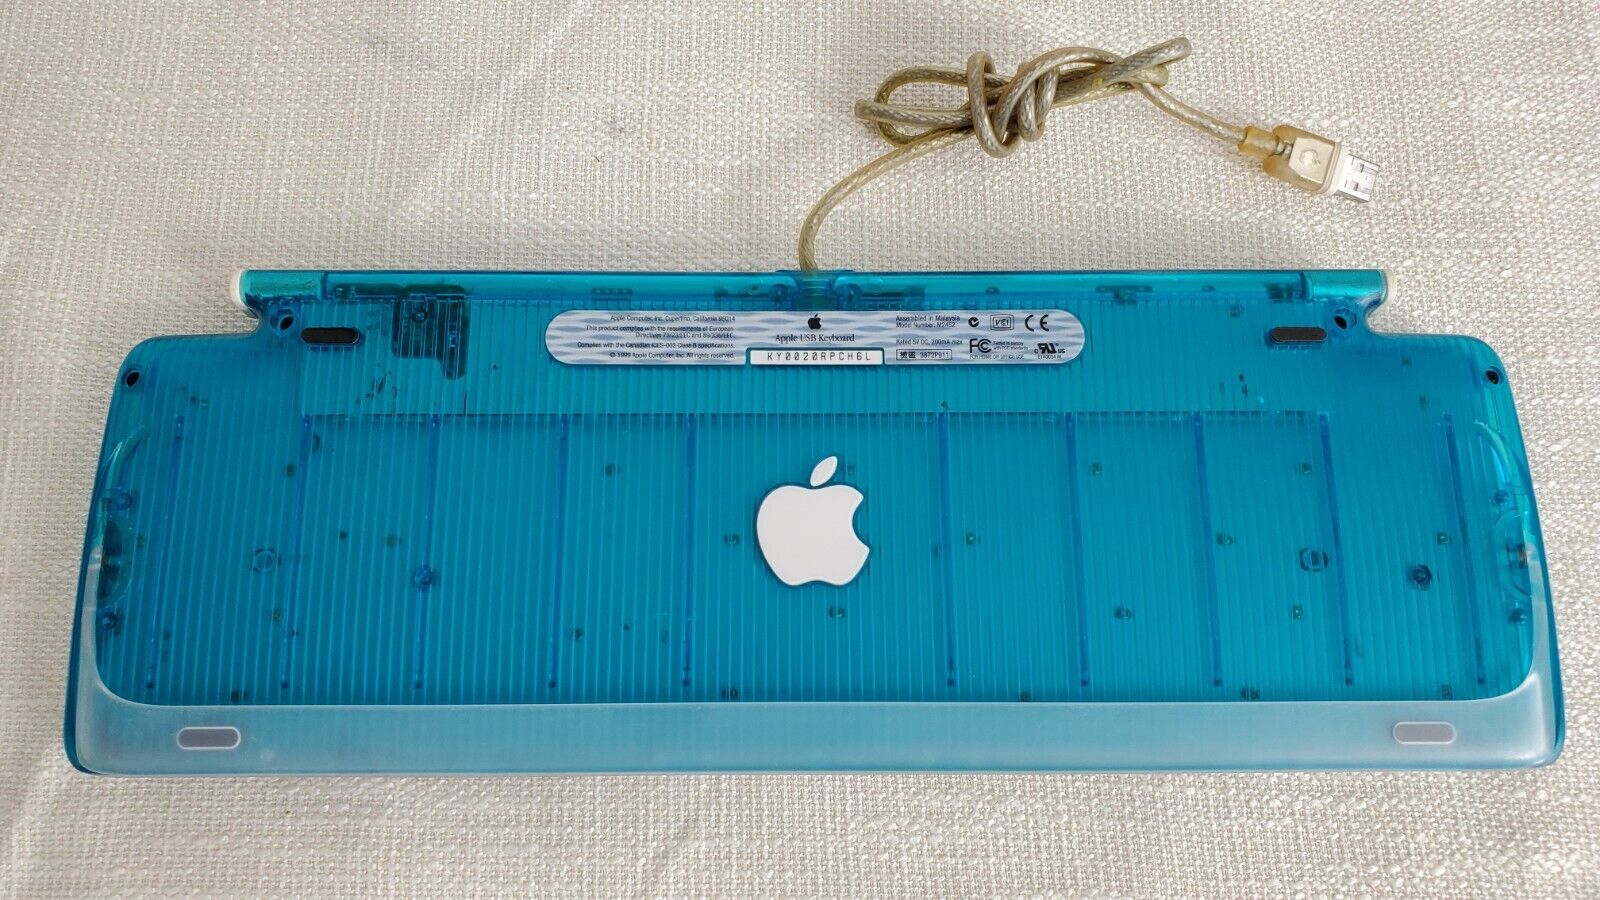 Vintage Apple USB Keyboard Bondi Blue Teal iMac iBook Power Mac G3 G4 G5 M2452